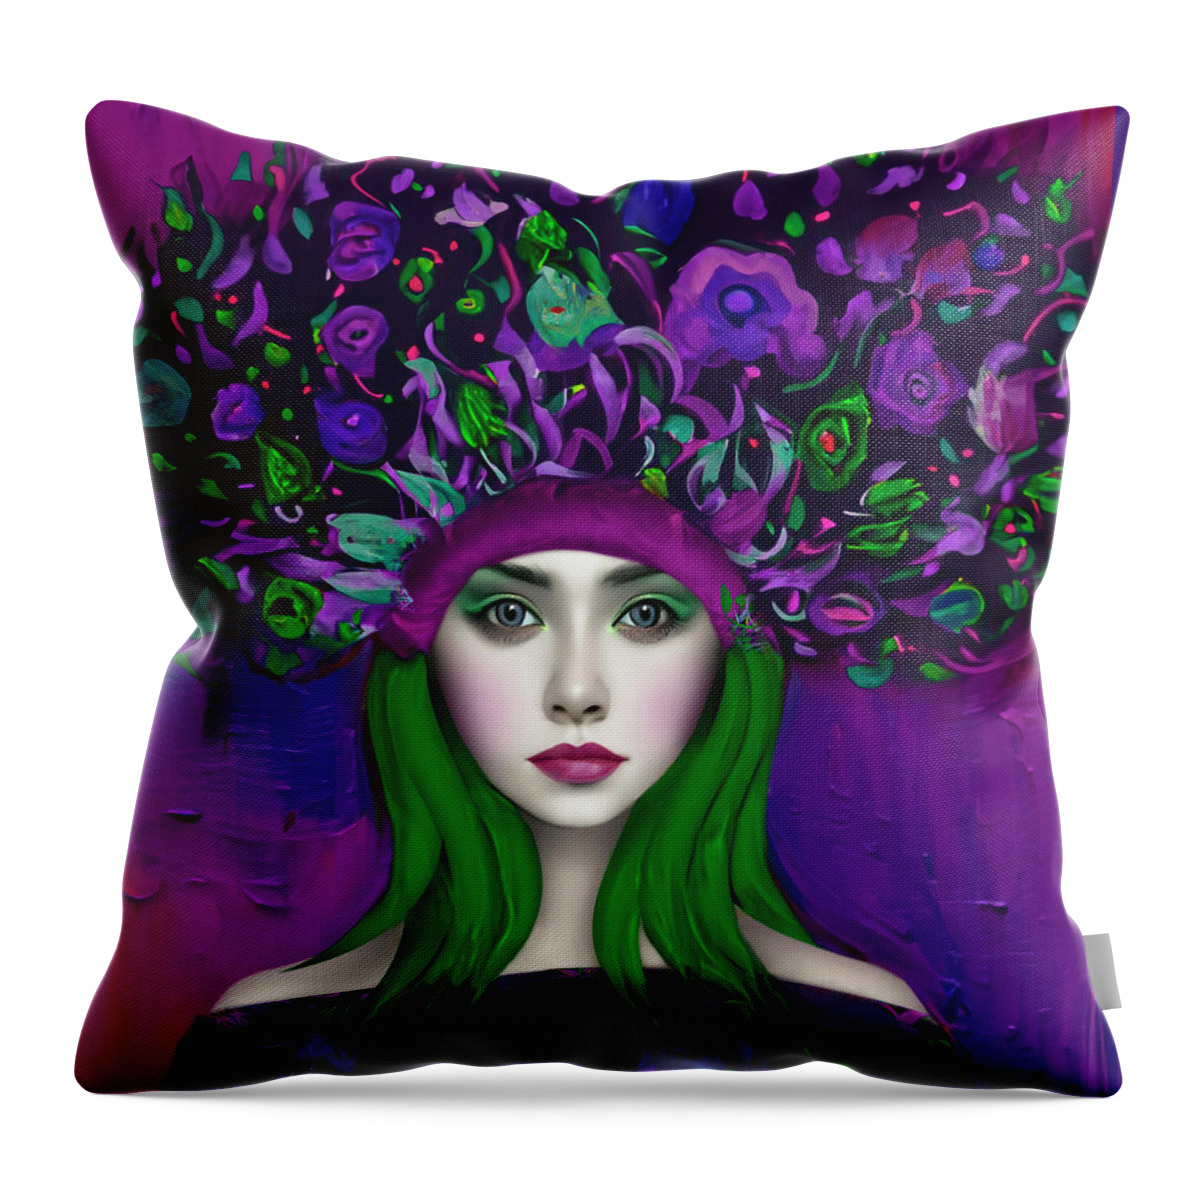 Woman Throw Pillow featuring the digital art Enchantress by Katy Breen